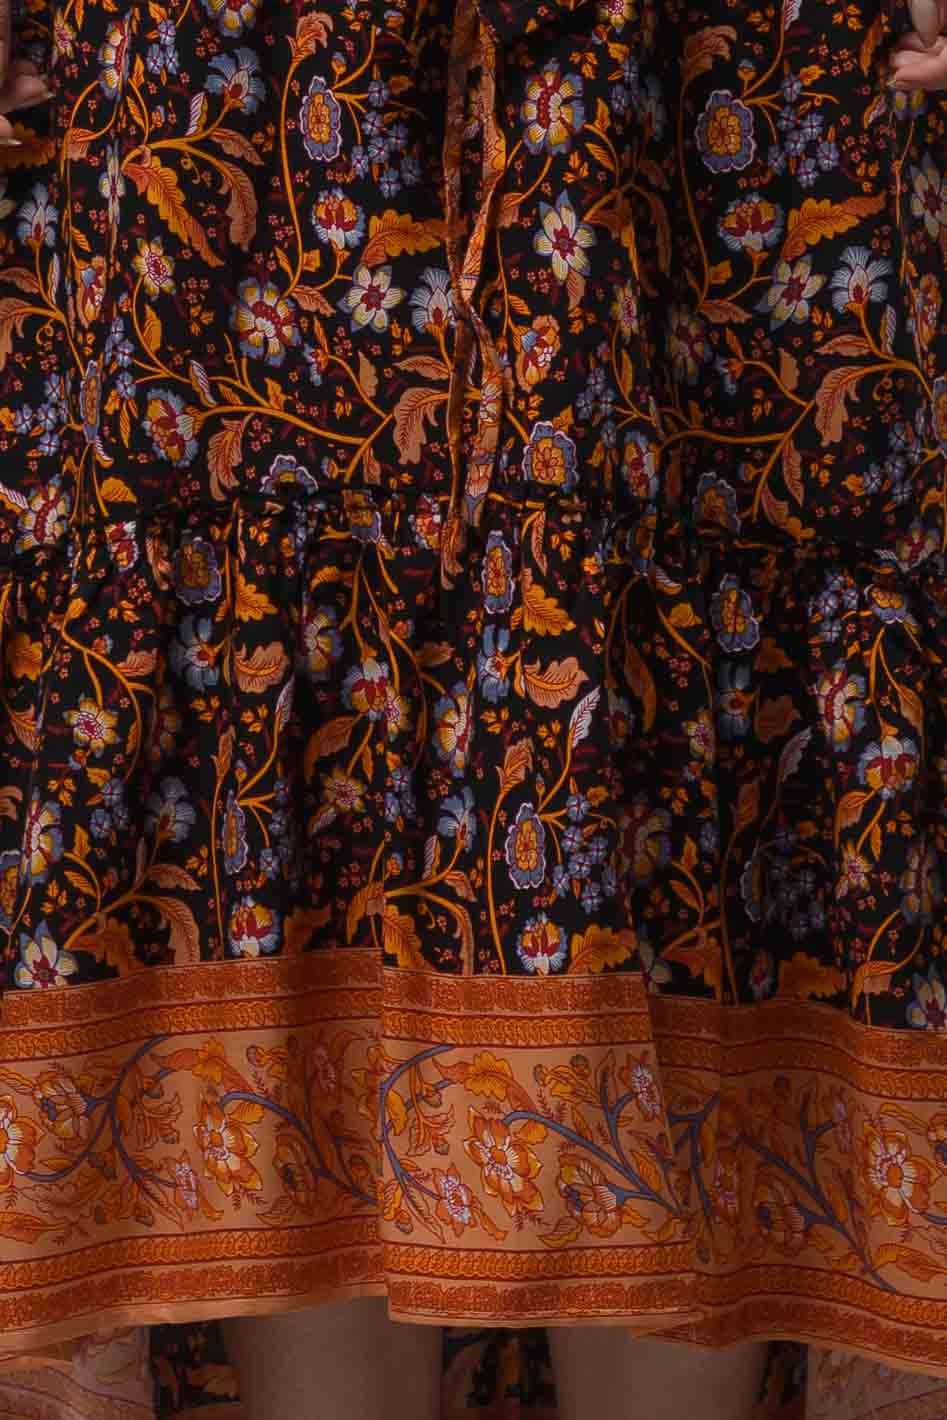 Bohemian orange flower border black print hi low hem elastic waist ruffled gypsy fashion long skirt